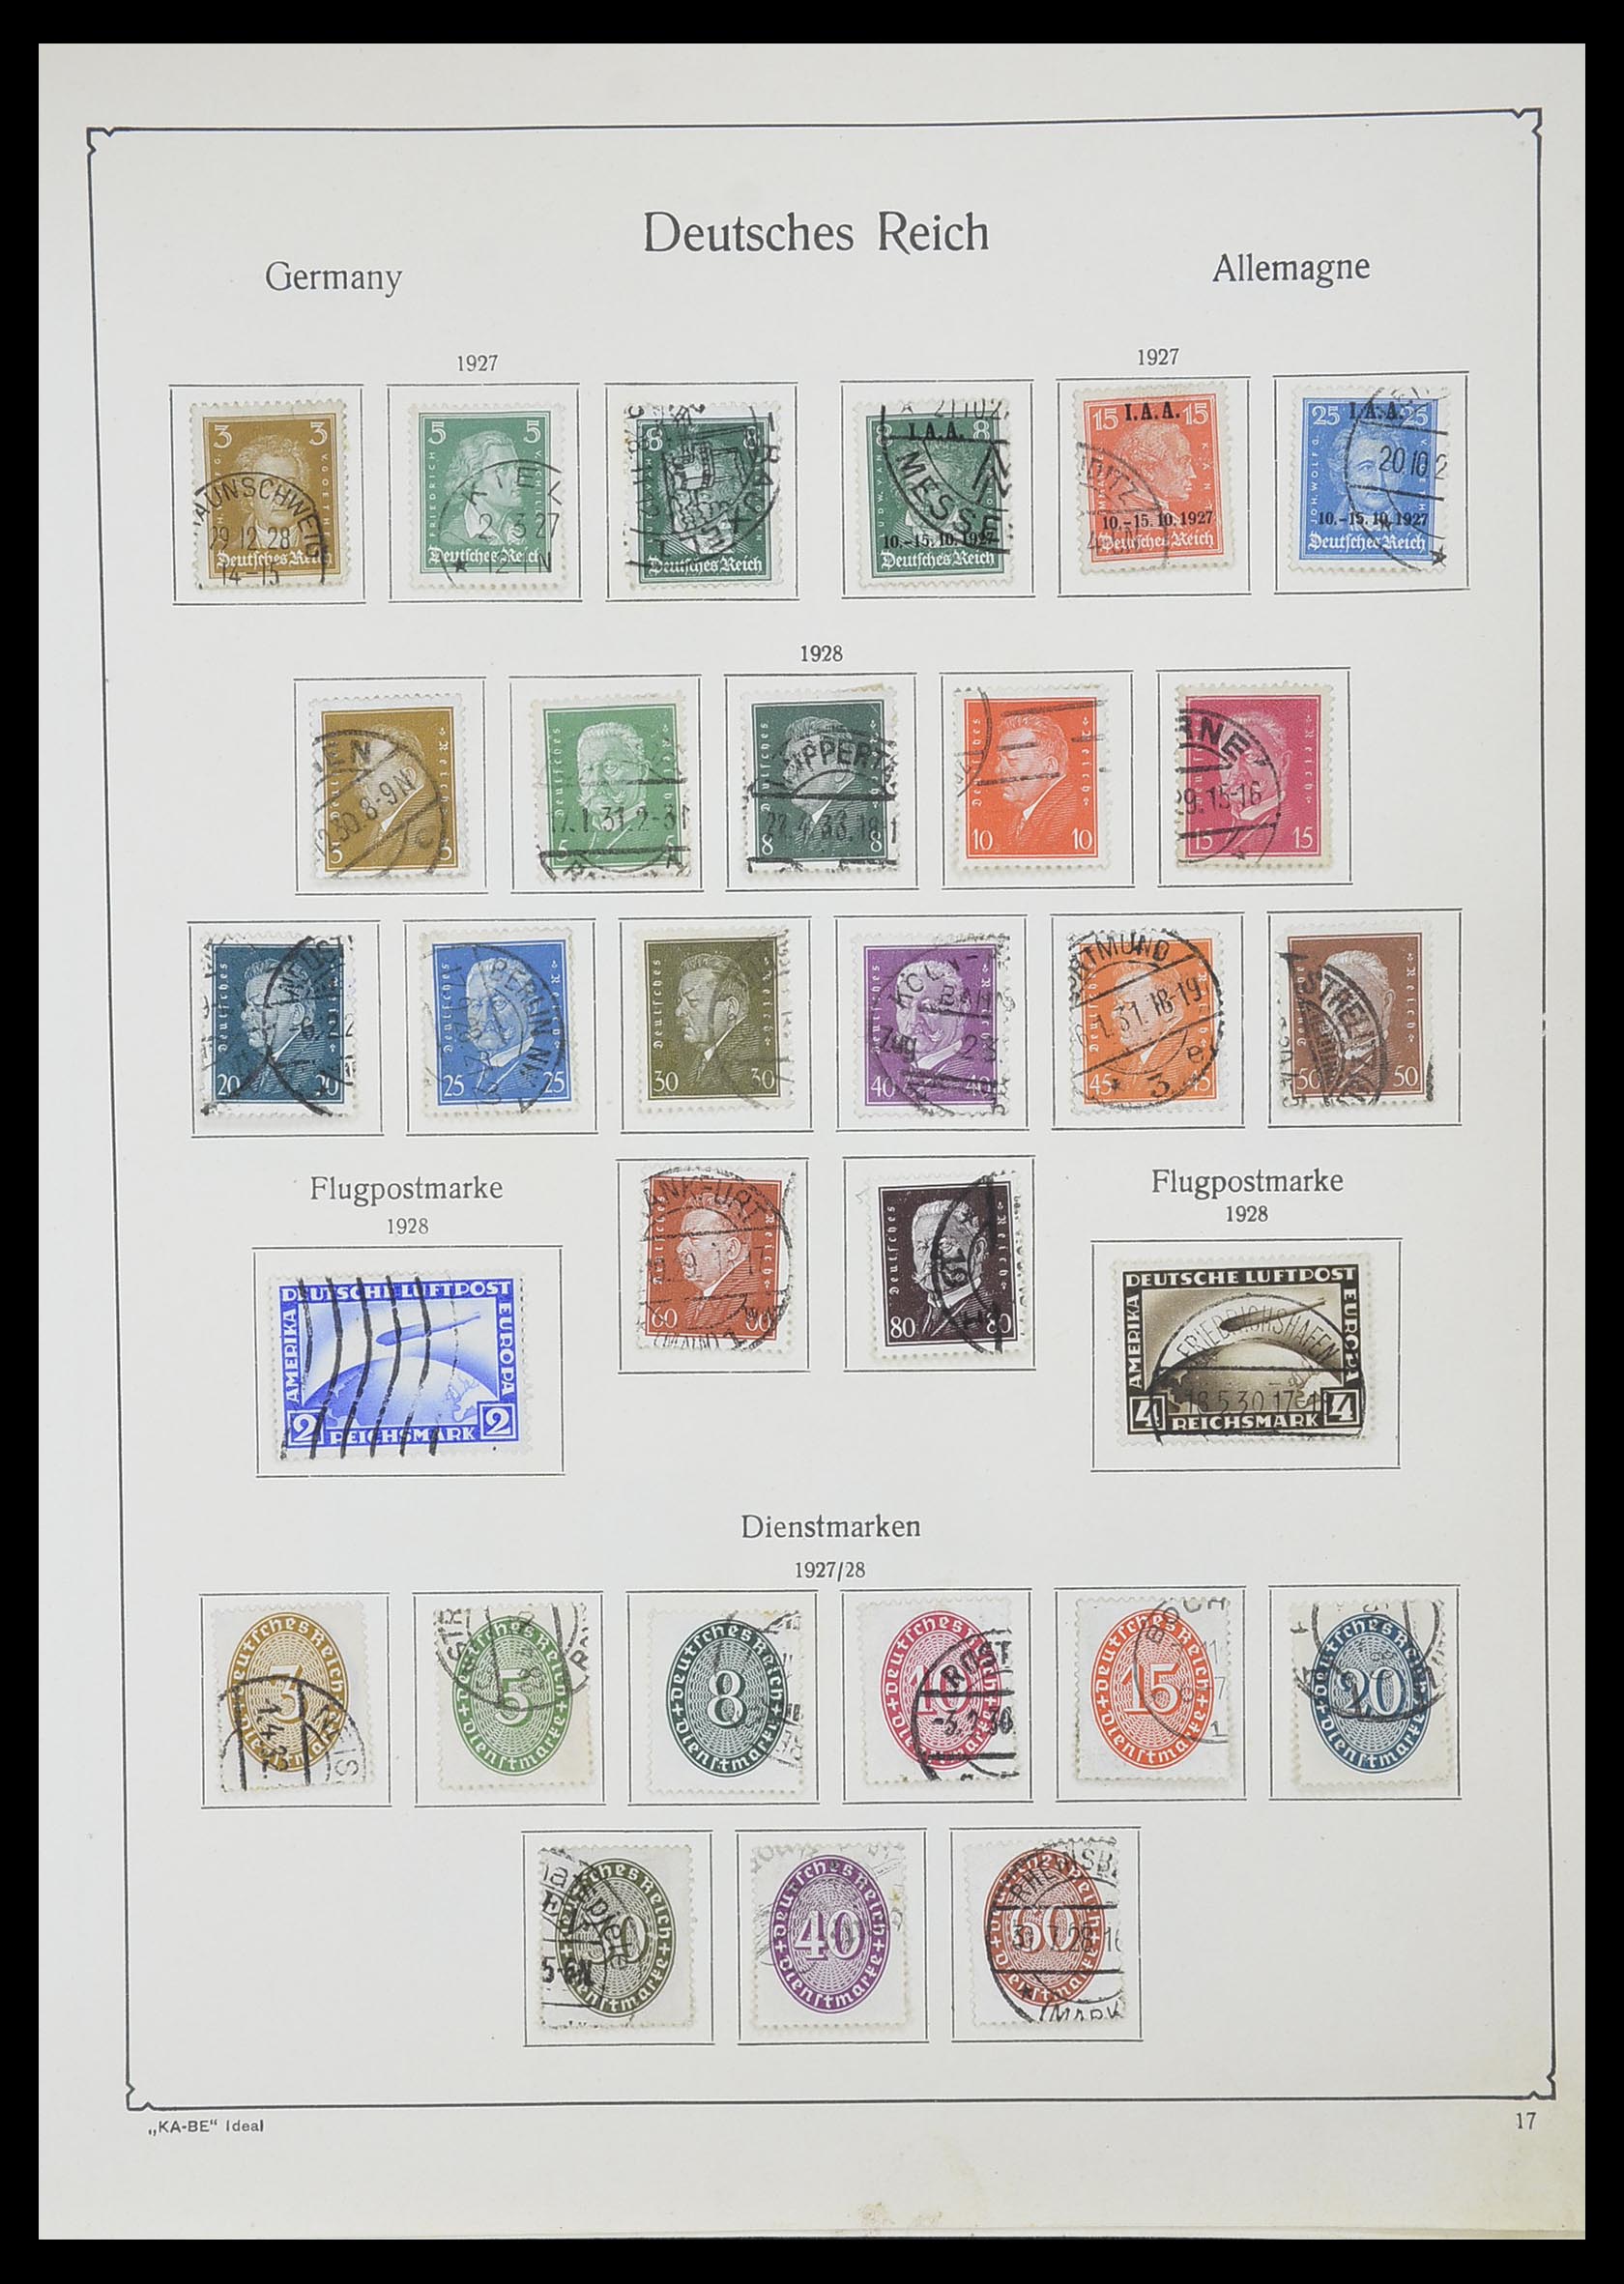 33359 022 - Stamp collection 33359 German Reich 1872-1945.